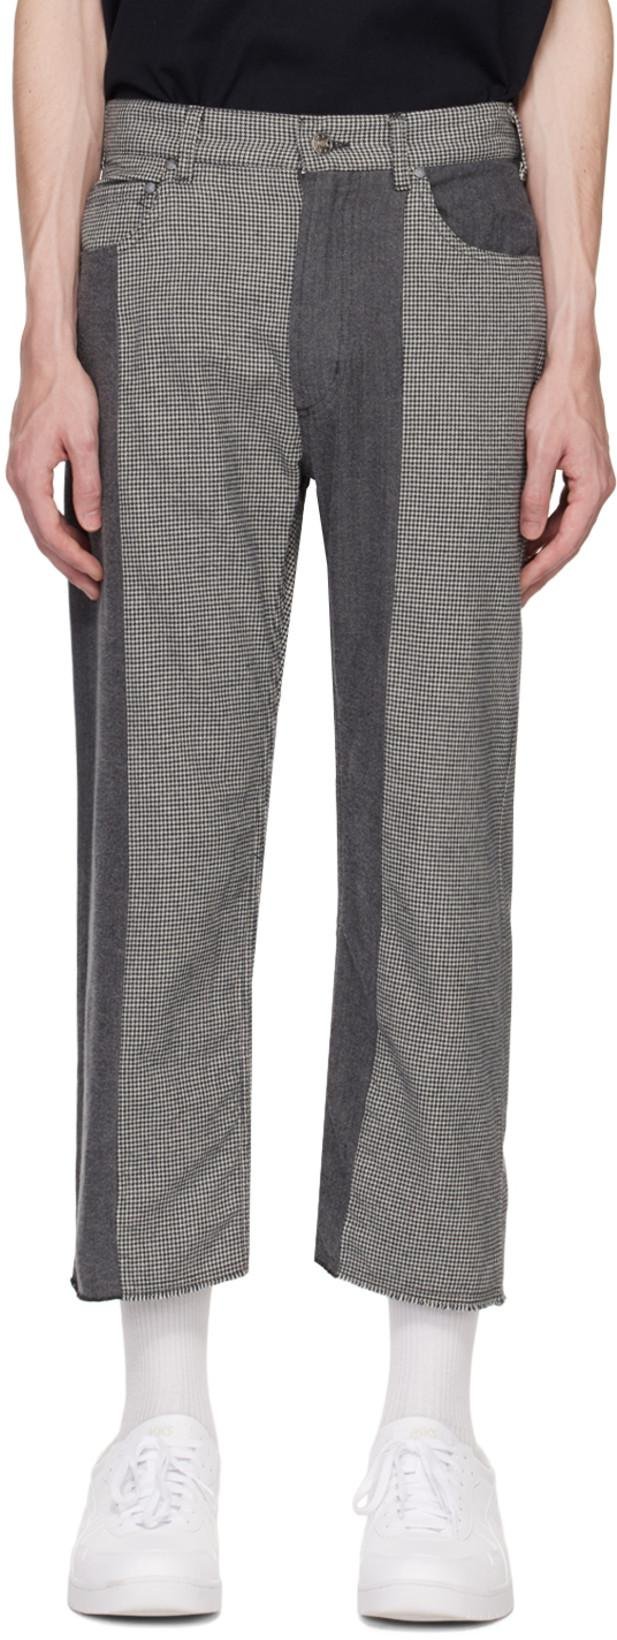 Gray Krazy Trousers by AI E